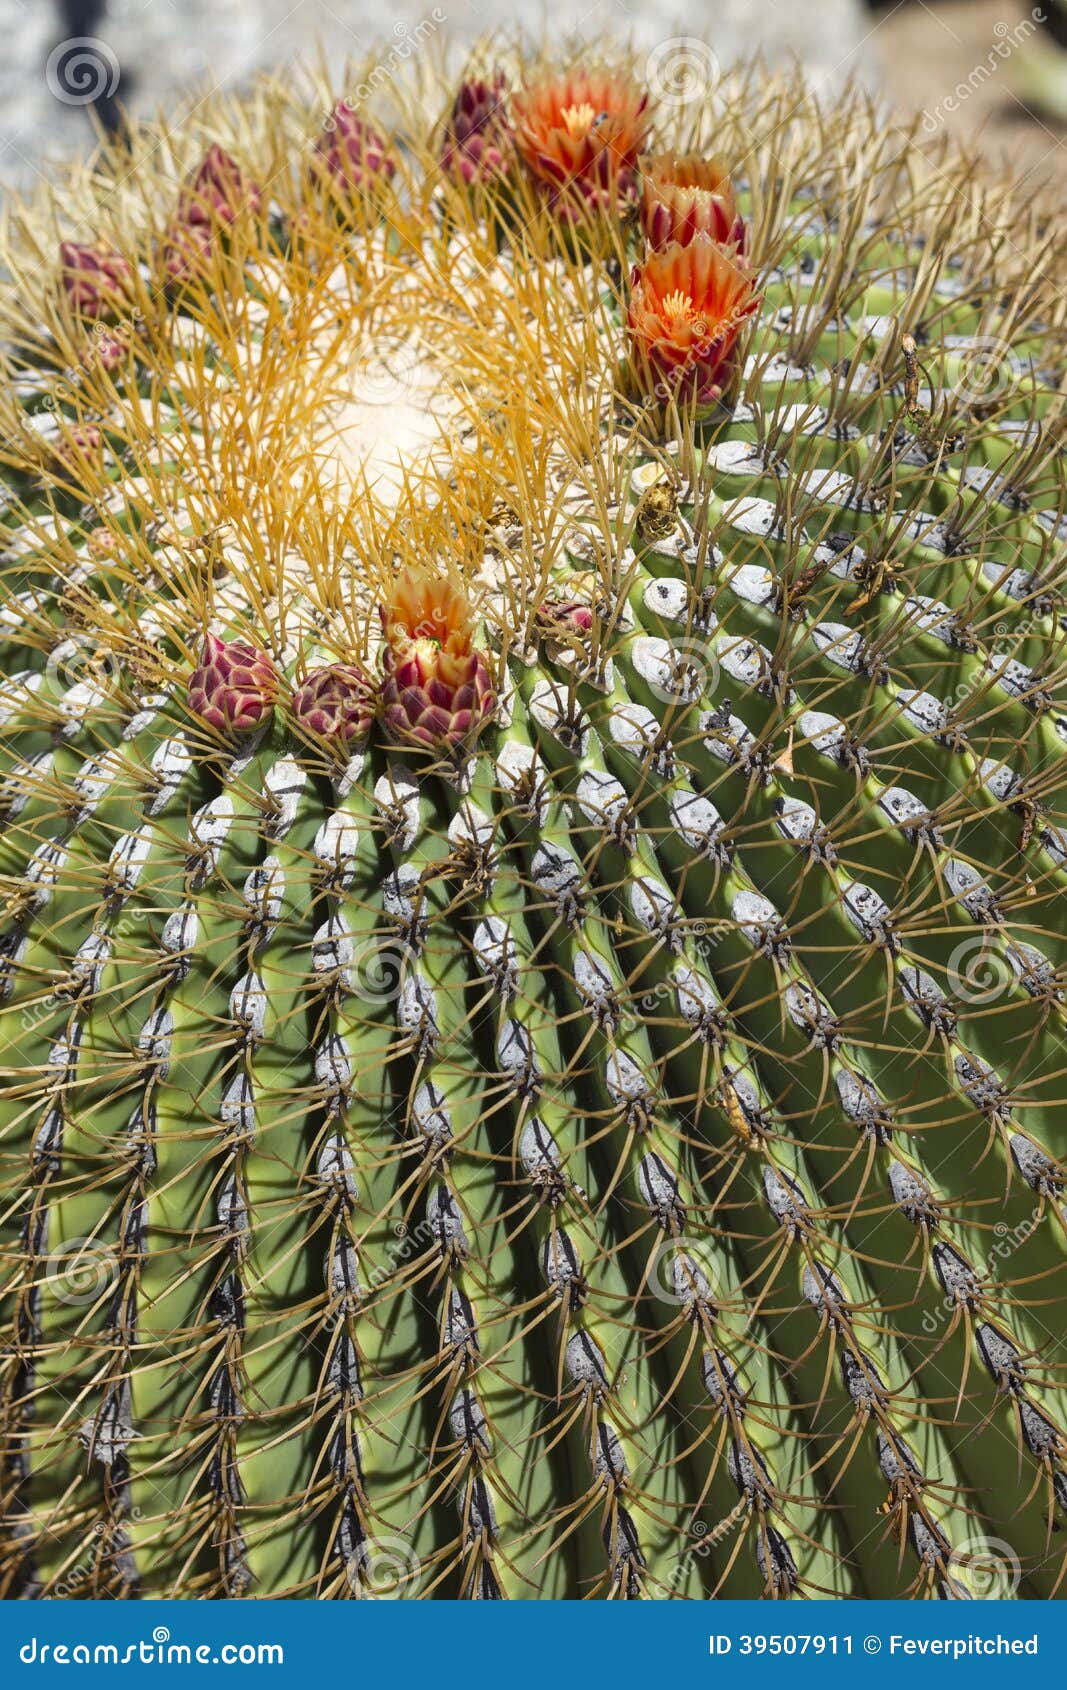 the biznaga cactus with flower blossom